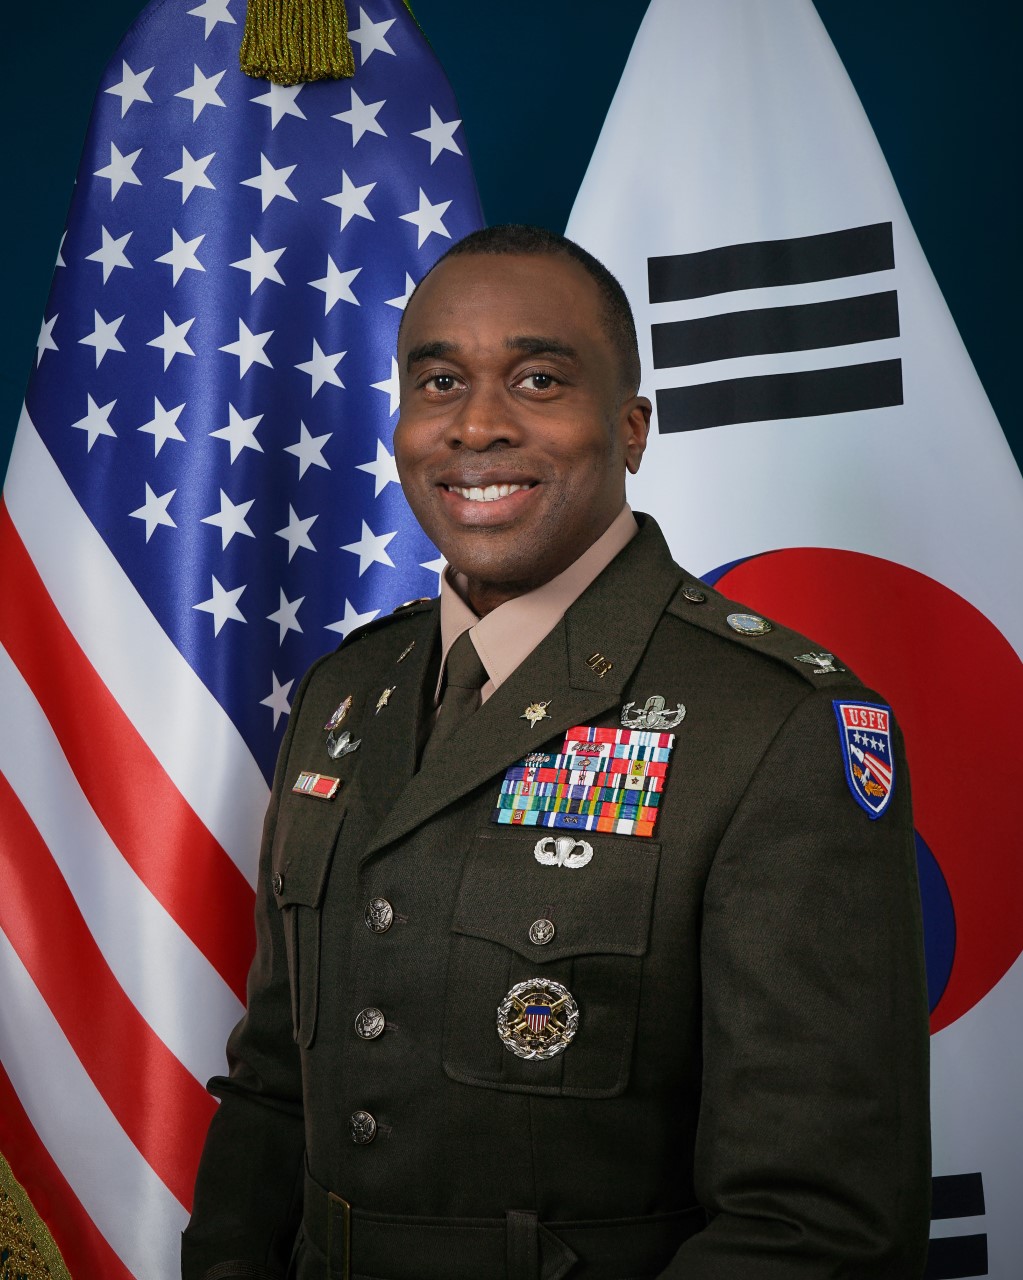 USFK Secretary Joint Staff - Colonel Paul Green